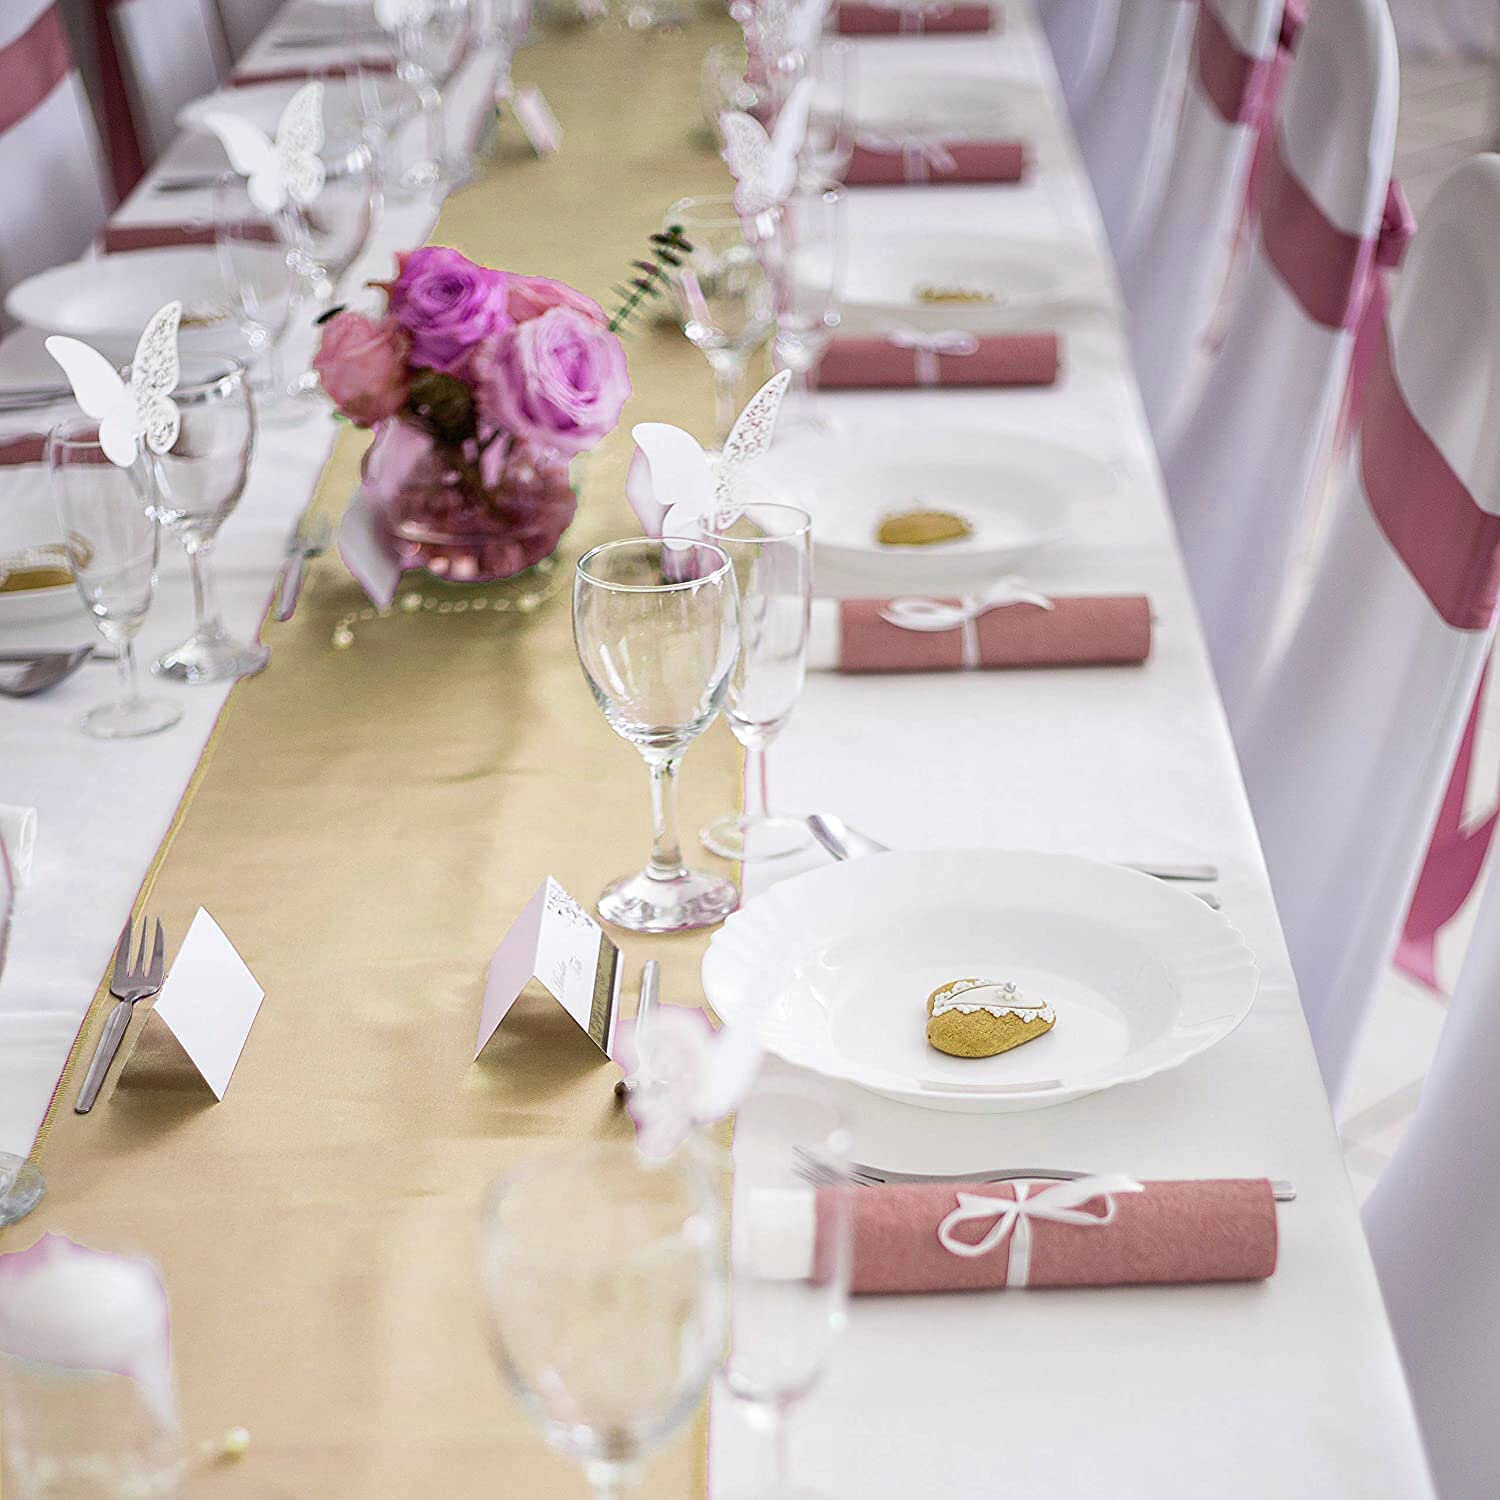 12"x108" Satin Table Runner Wedding Dinner Party Banquet Decor Tablecloth Linens 